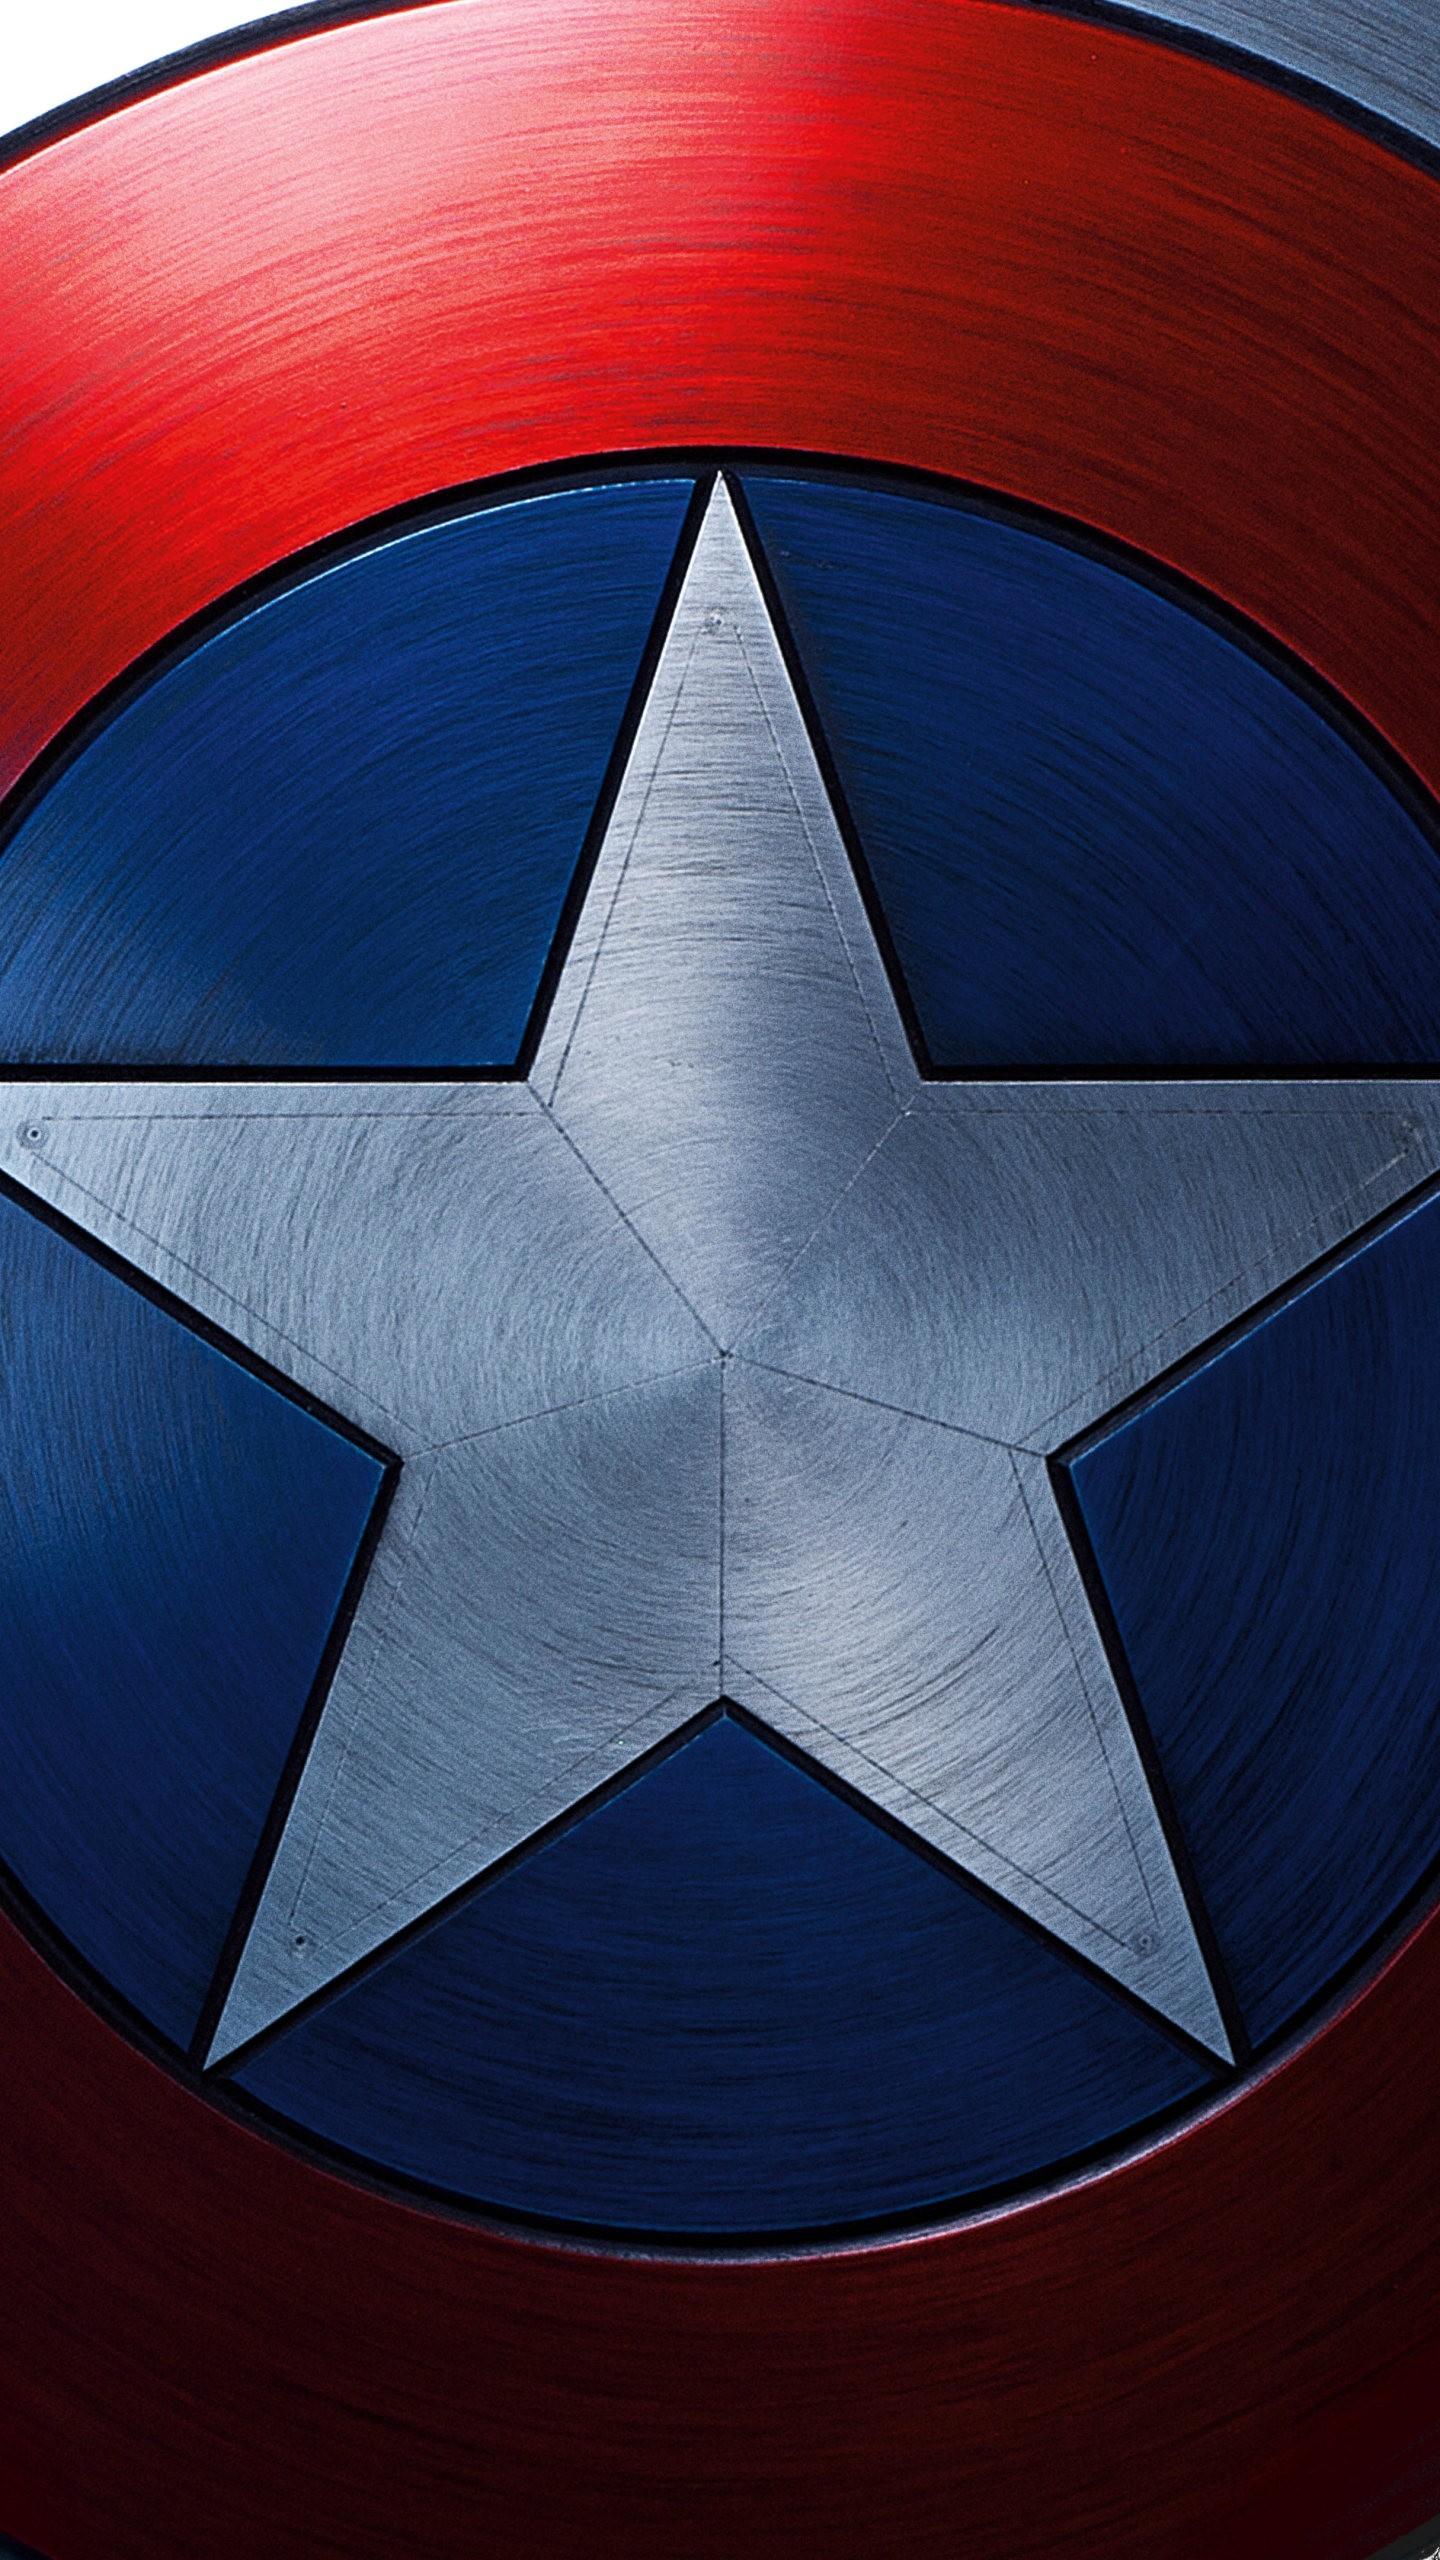 Marvel Wallpaper For Iphone - Captain America Shield Wallpaper Iphone -  1080x1920 Wallpaper 